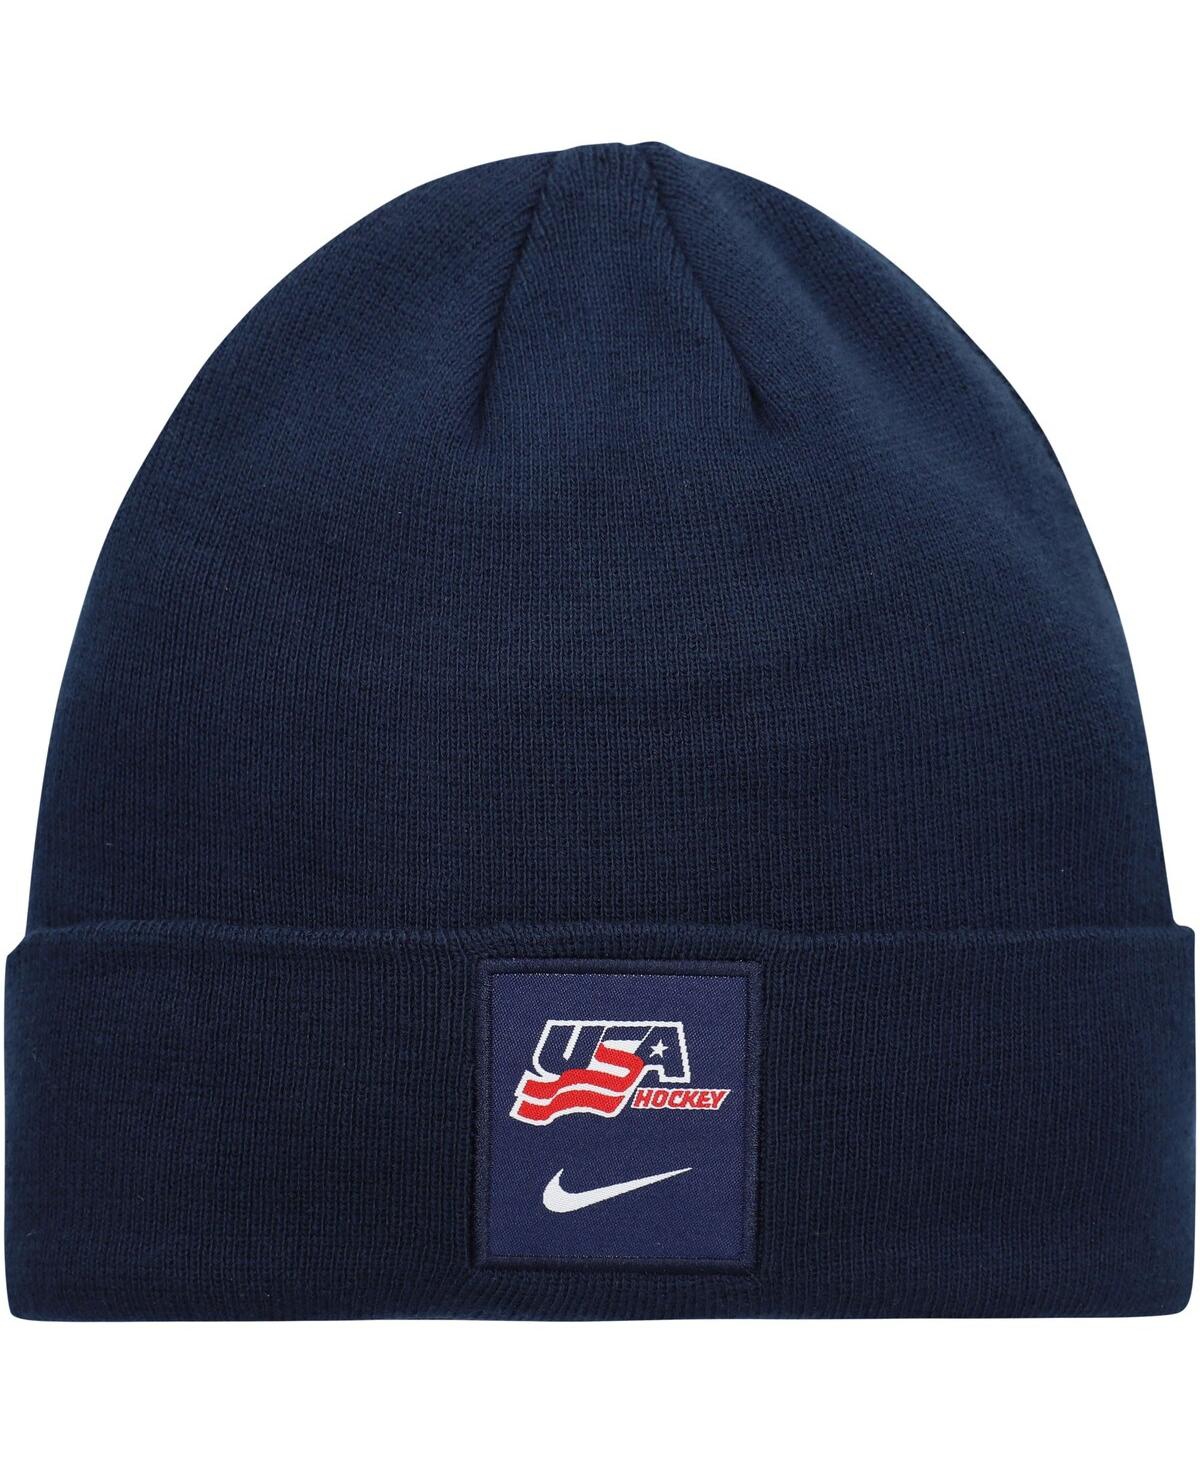 Shop Nike Men's  Navy Usa Hockey Logo Cuffed Knit Hat